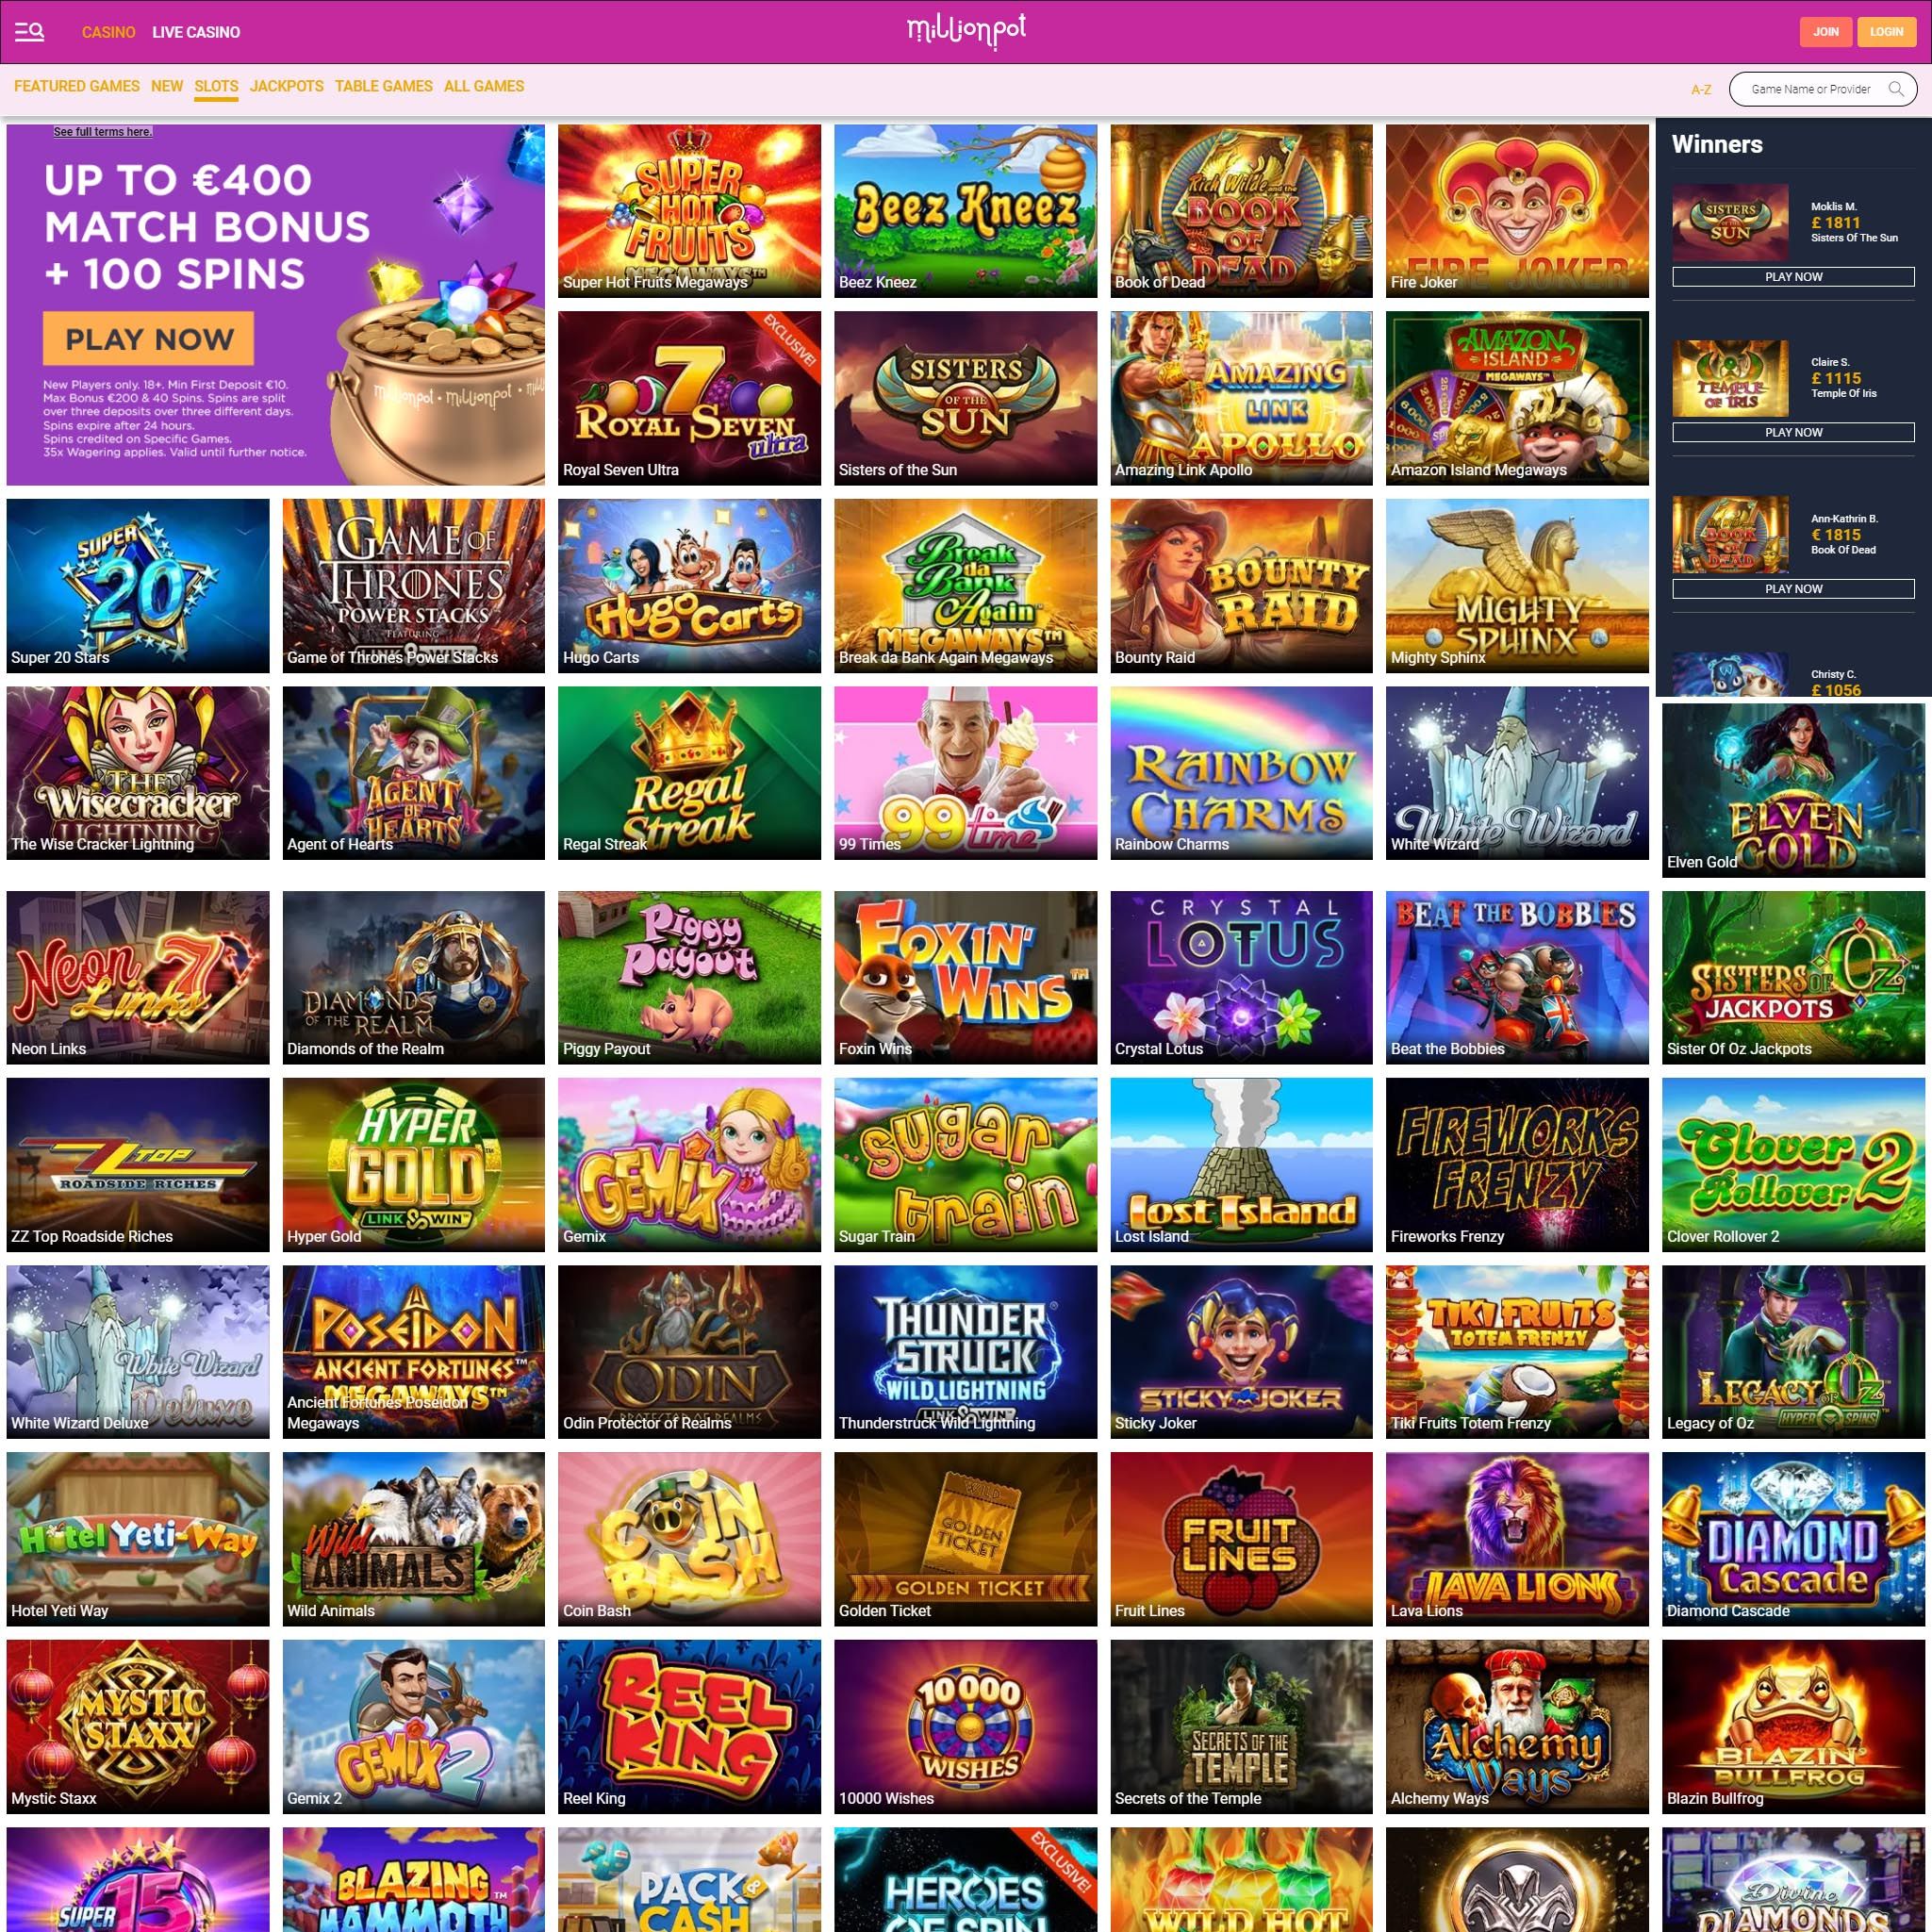 Find MillionPot game catalog